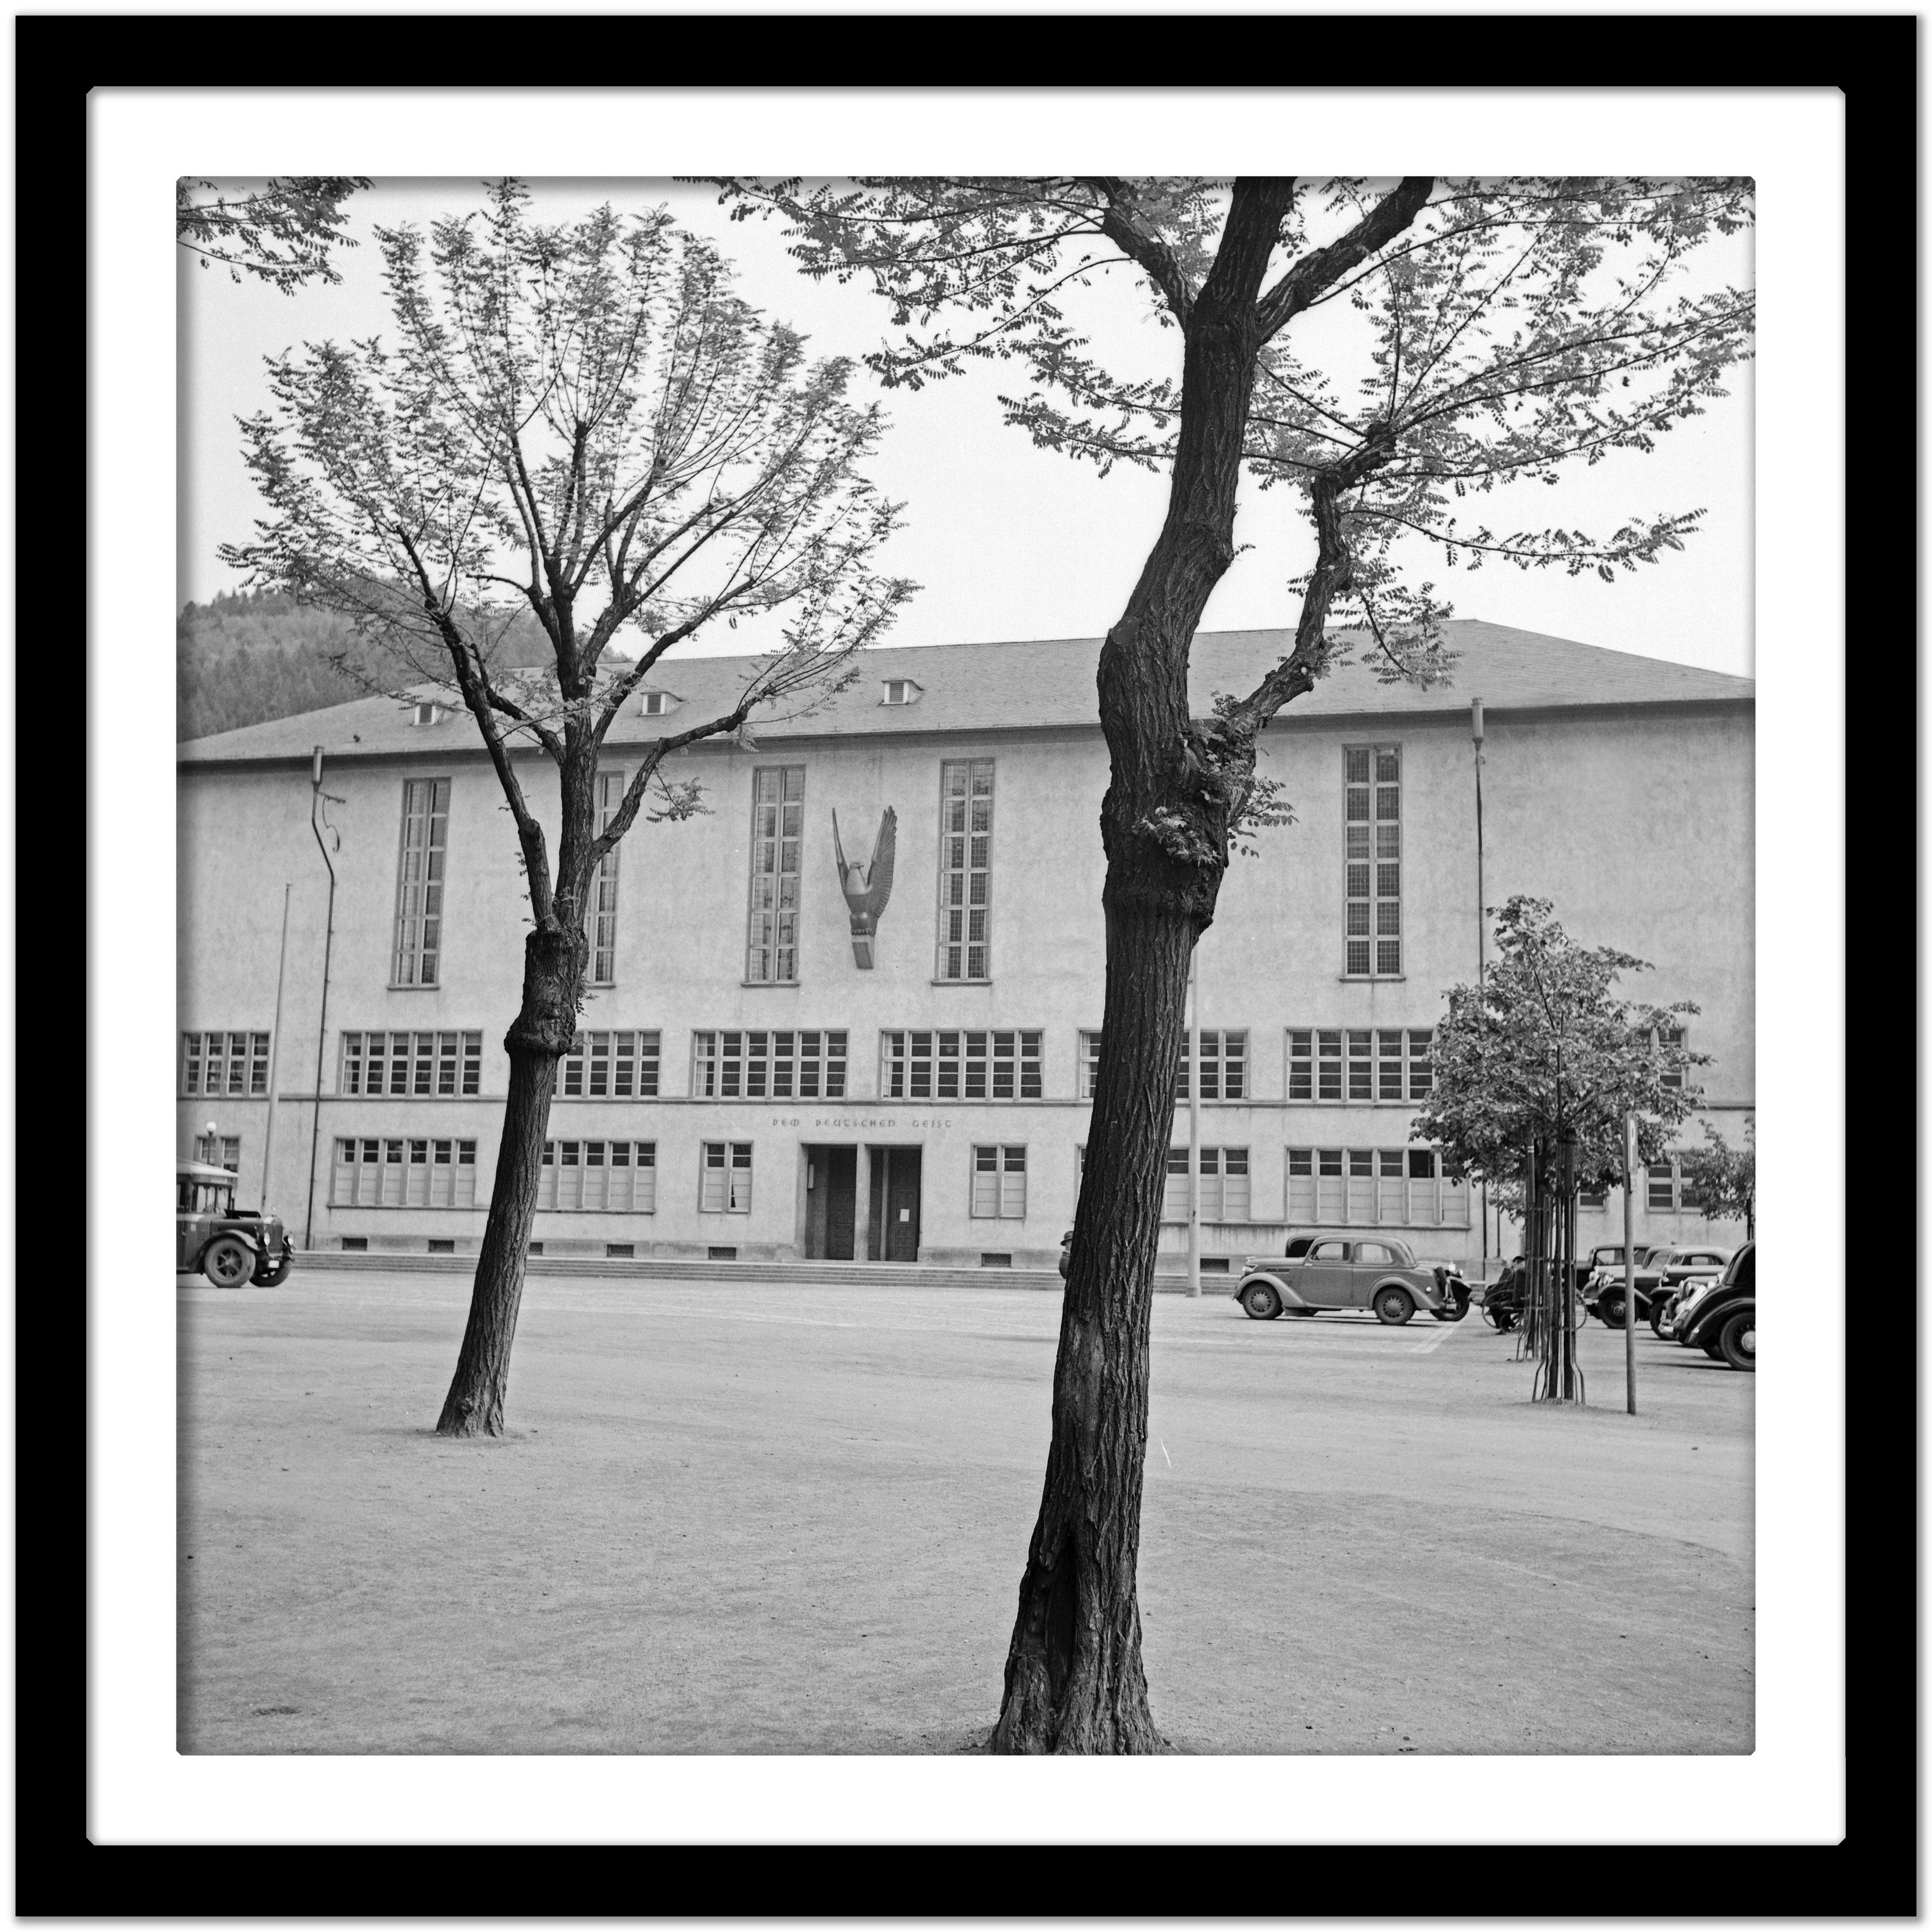 Building of Heidelberg university, Germany 1938, PrintedLater - Modern Photograph by Karl Heinrich Lämmel